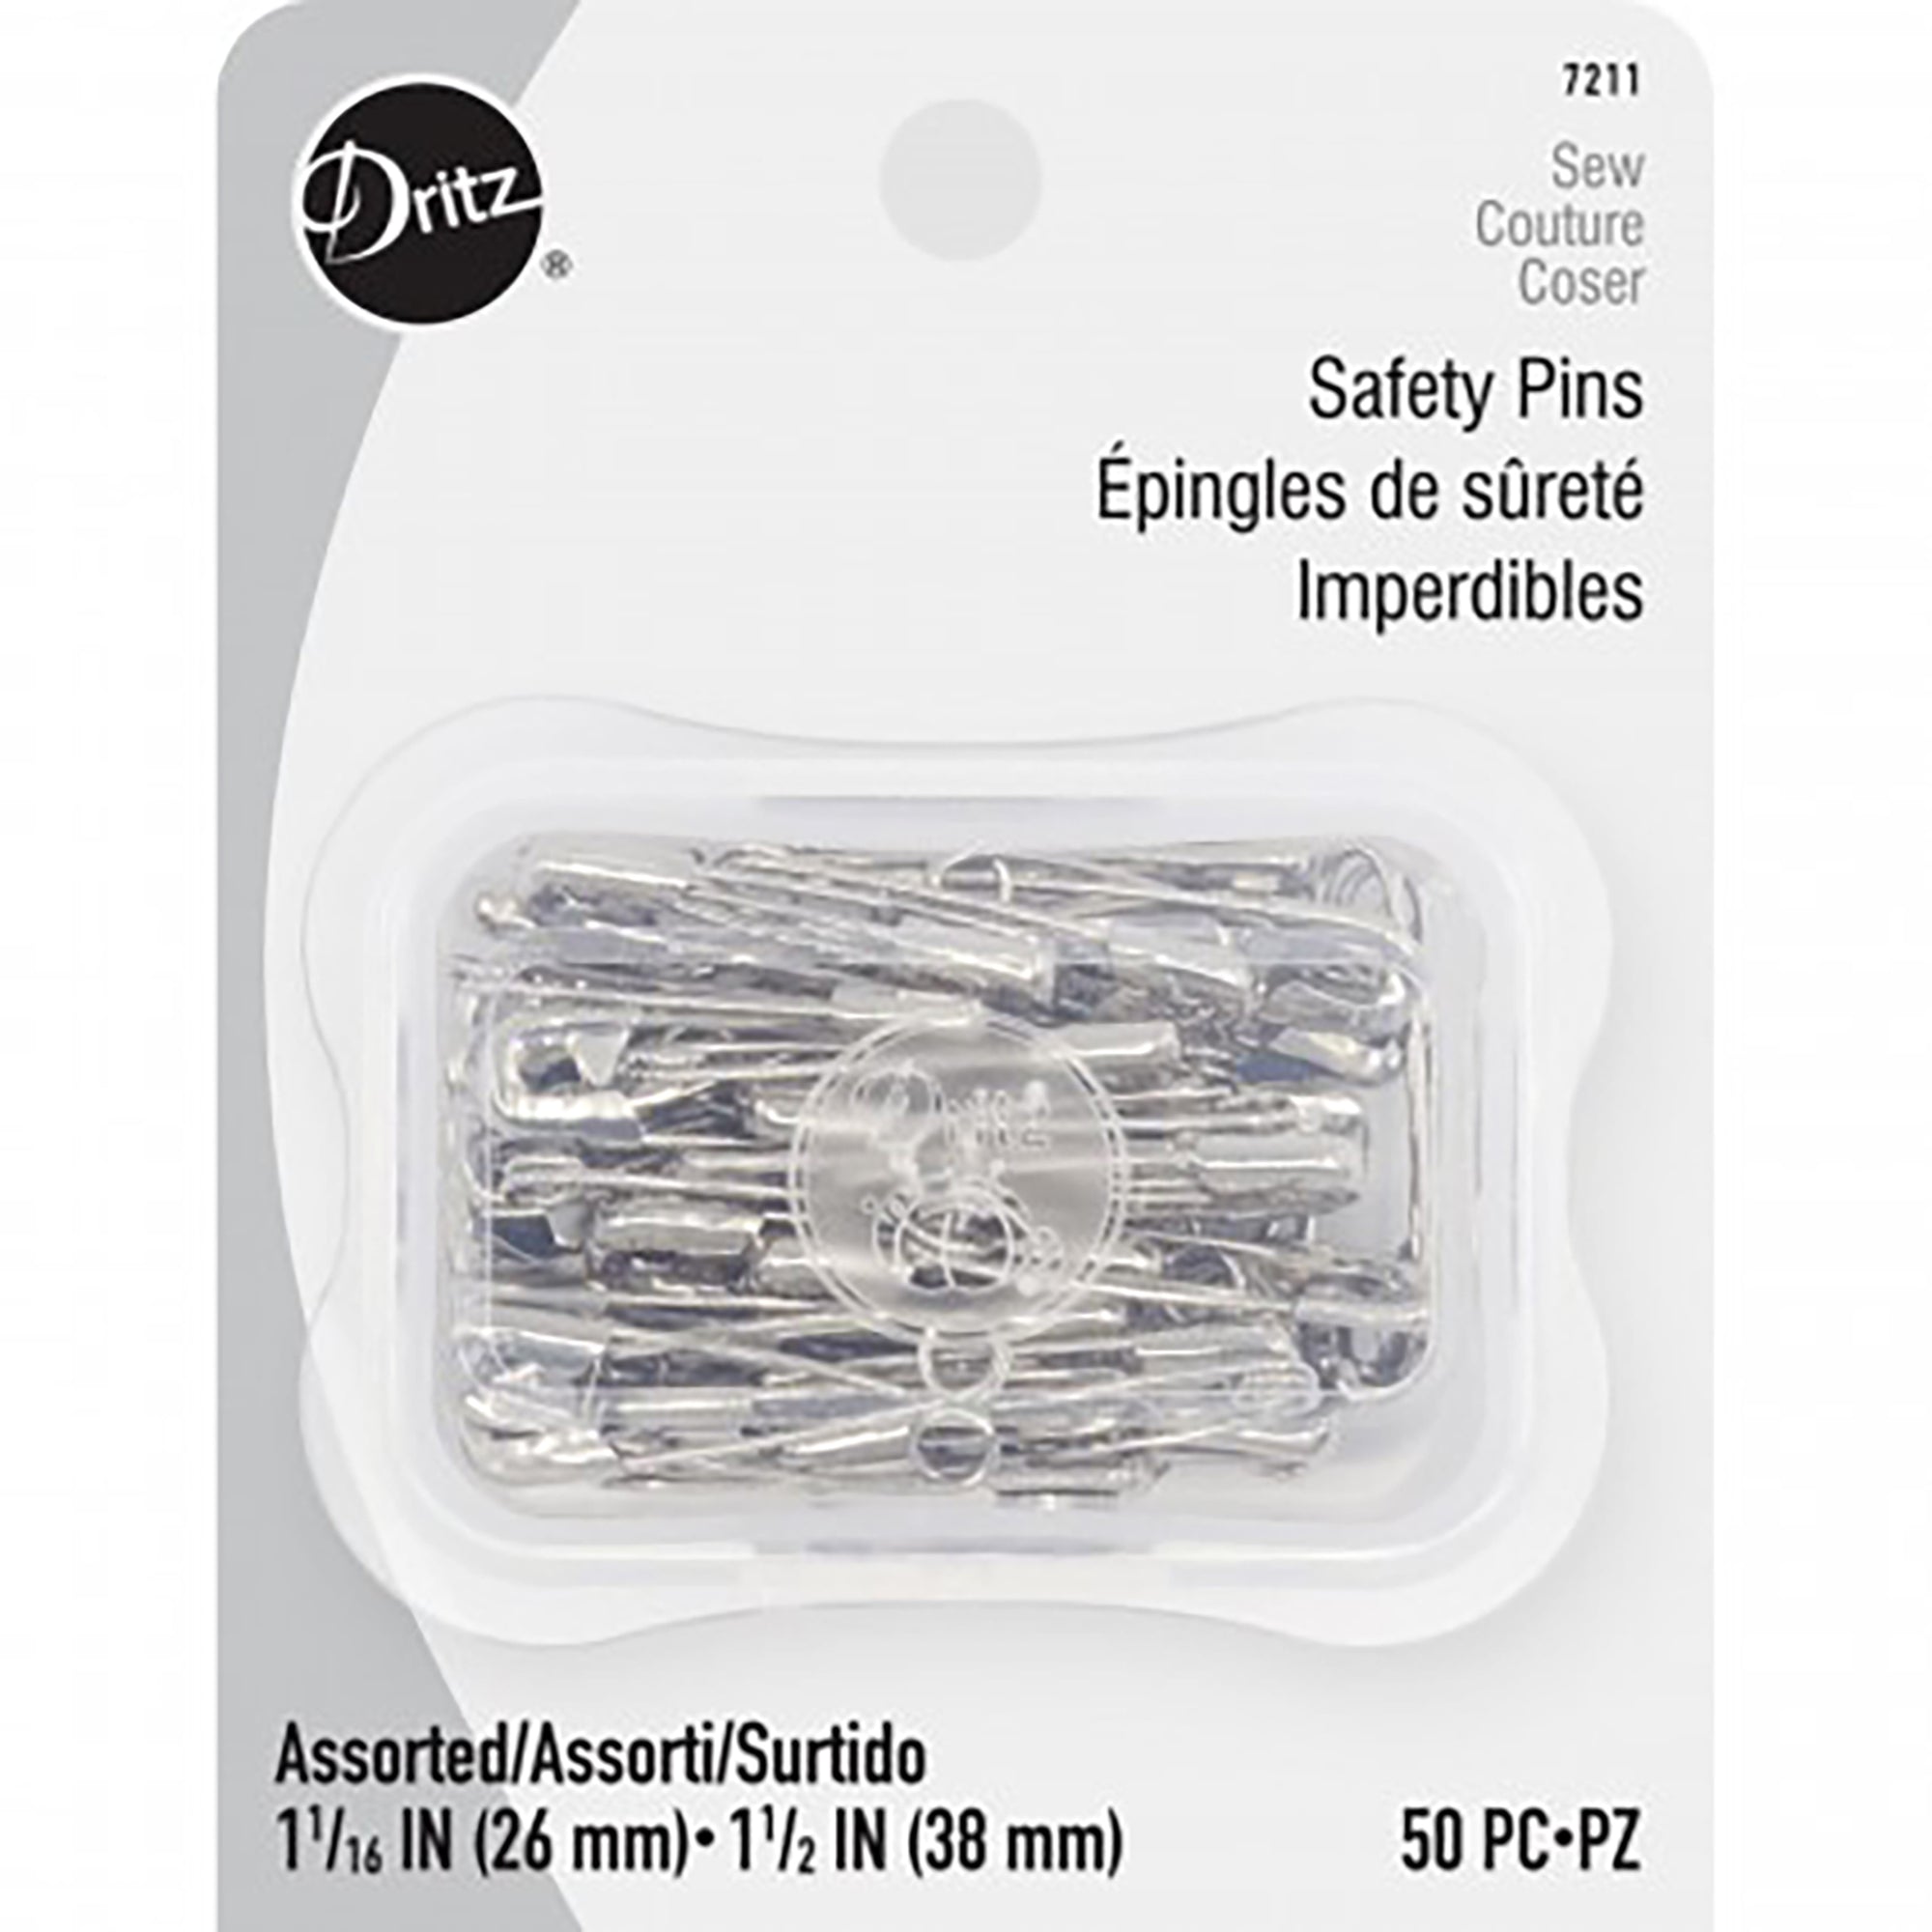 Safety Pins Assortment, Sizes 1 & 2 - 50 Pcs